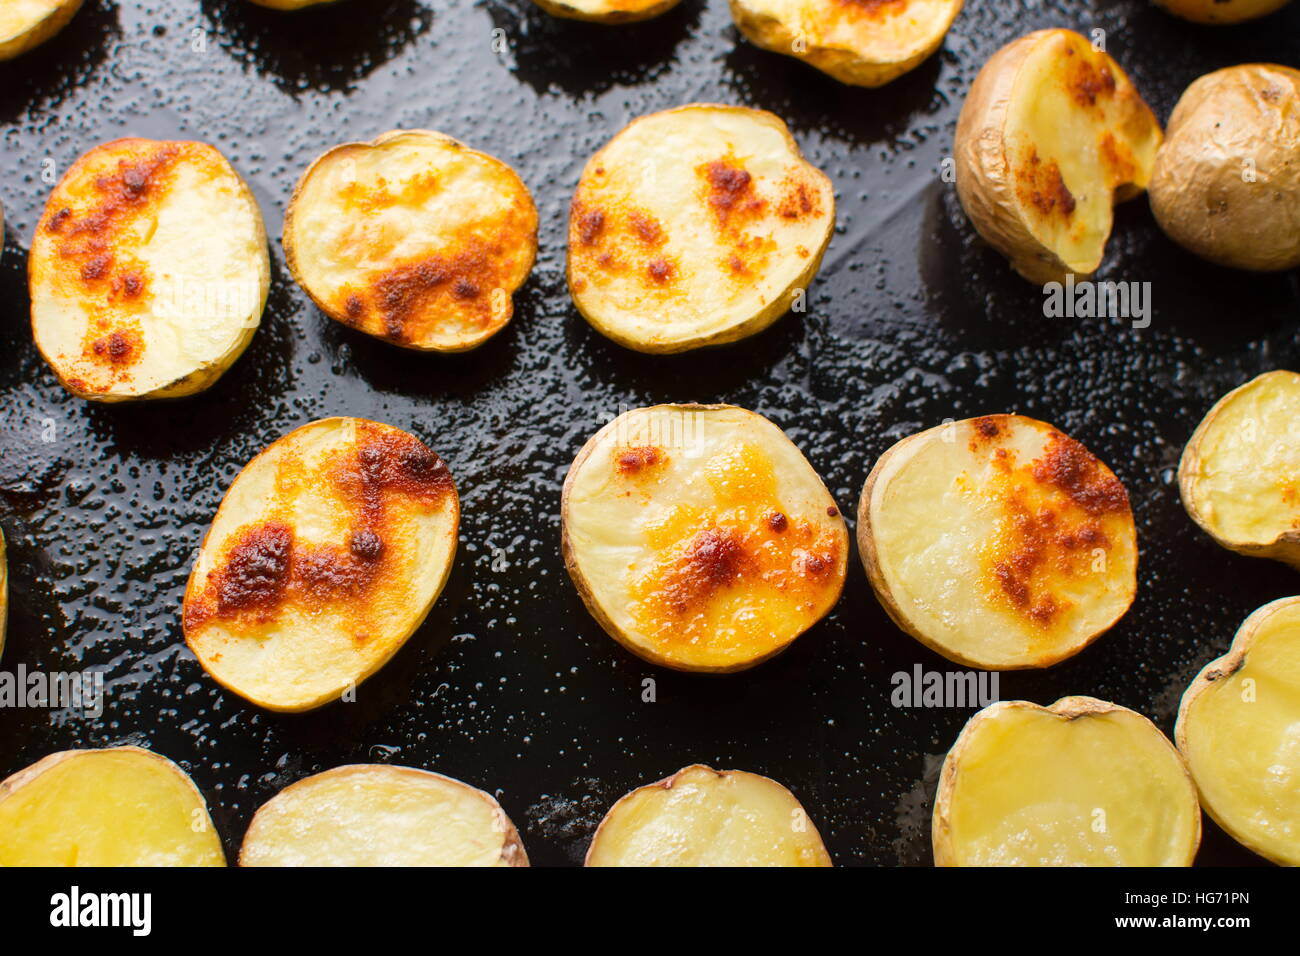 Roasted potato slices on a black baking plate Stock Photo